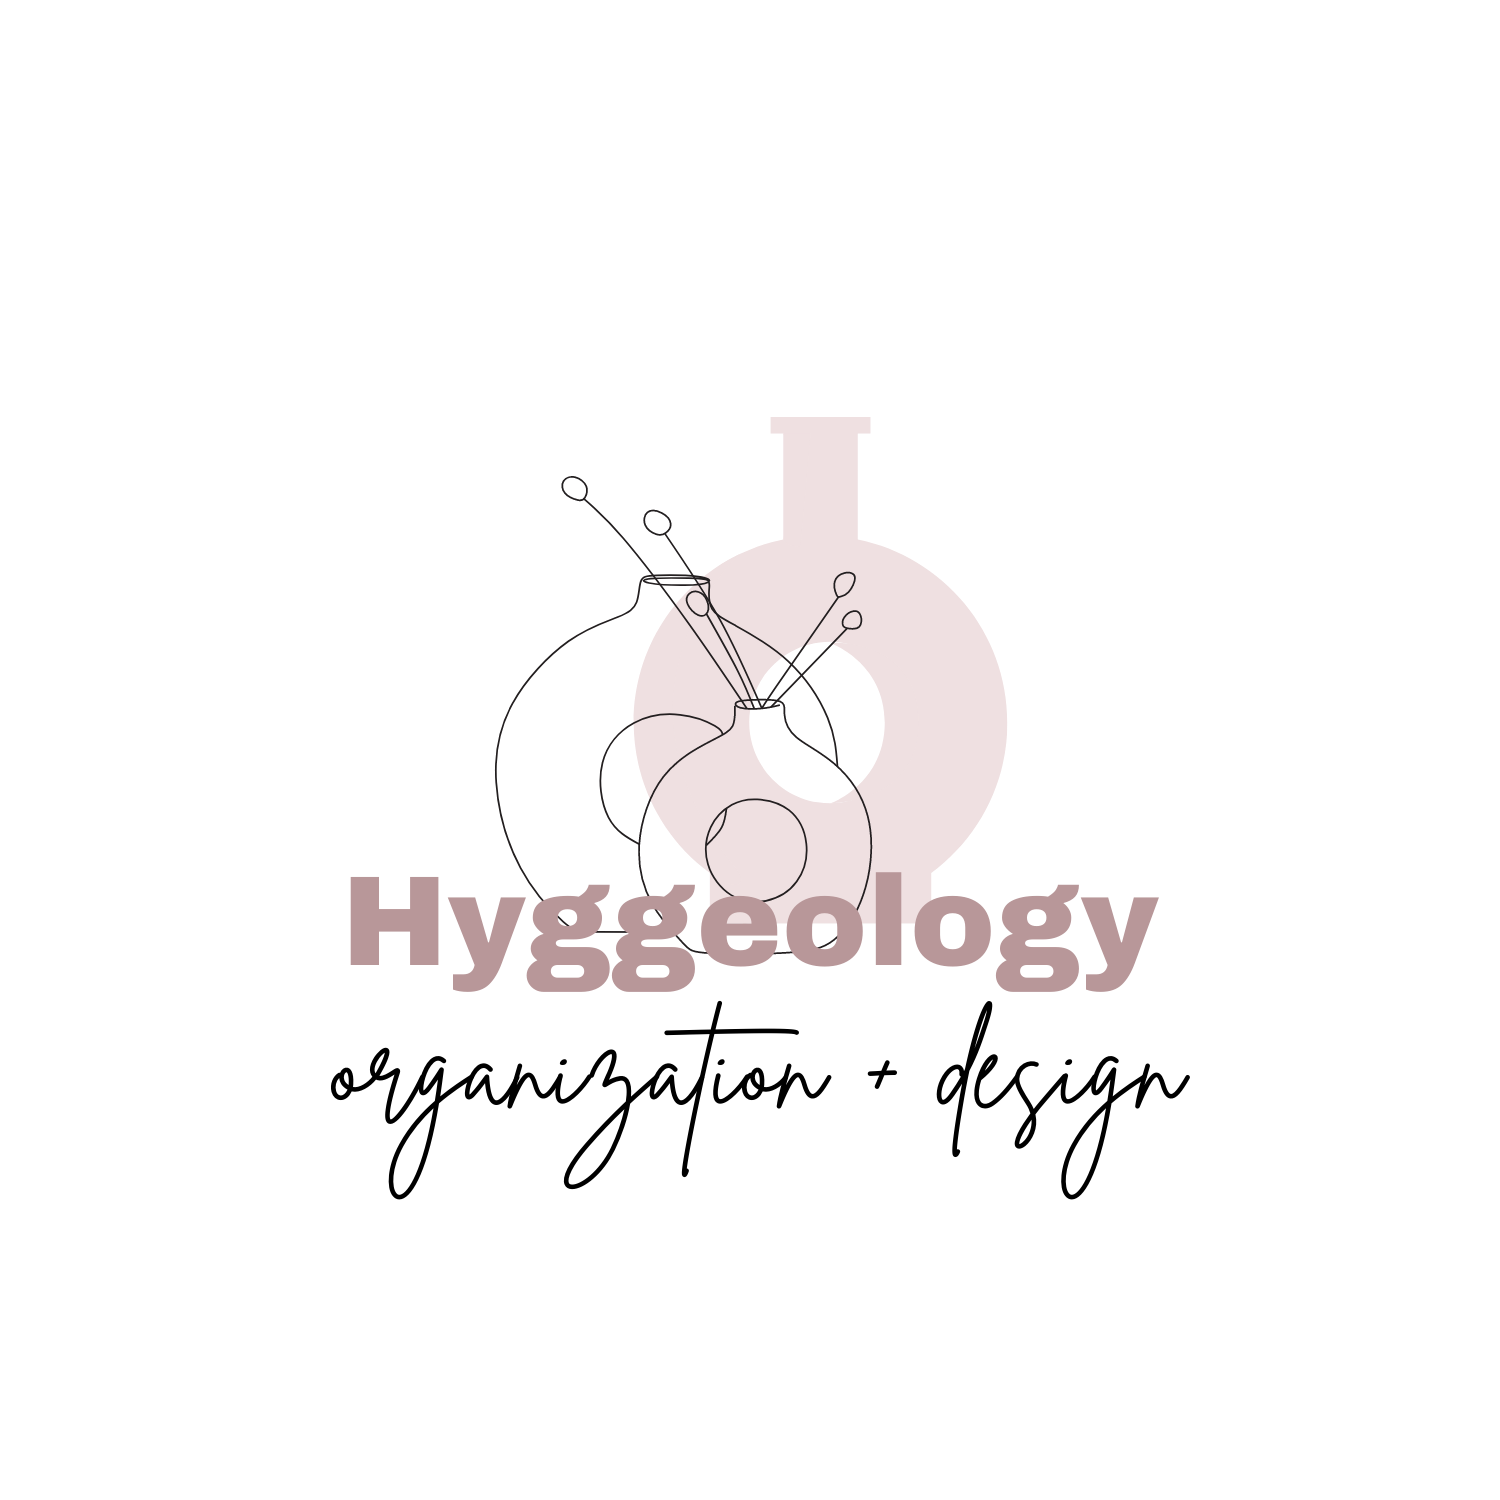 Hyggeology Organization and Design Logo